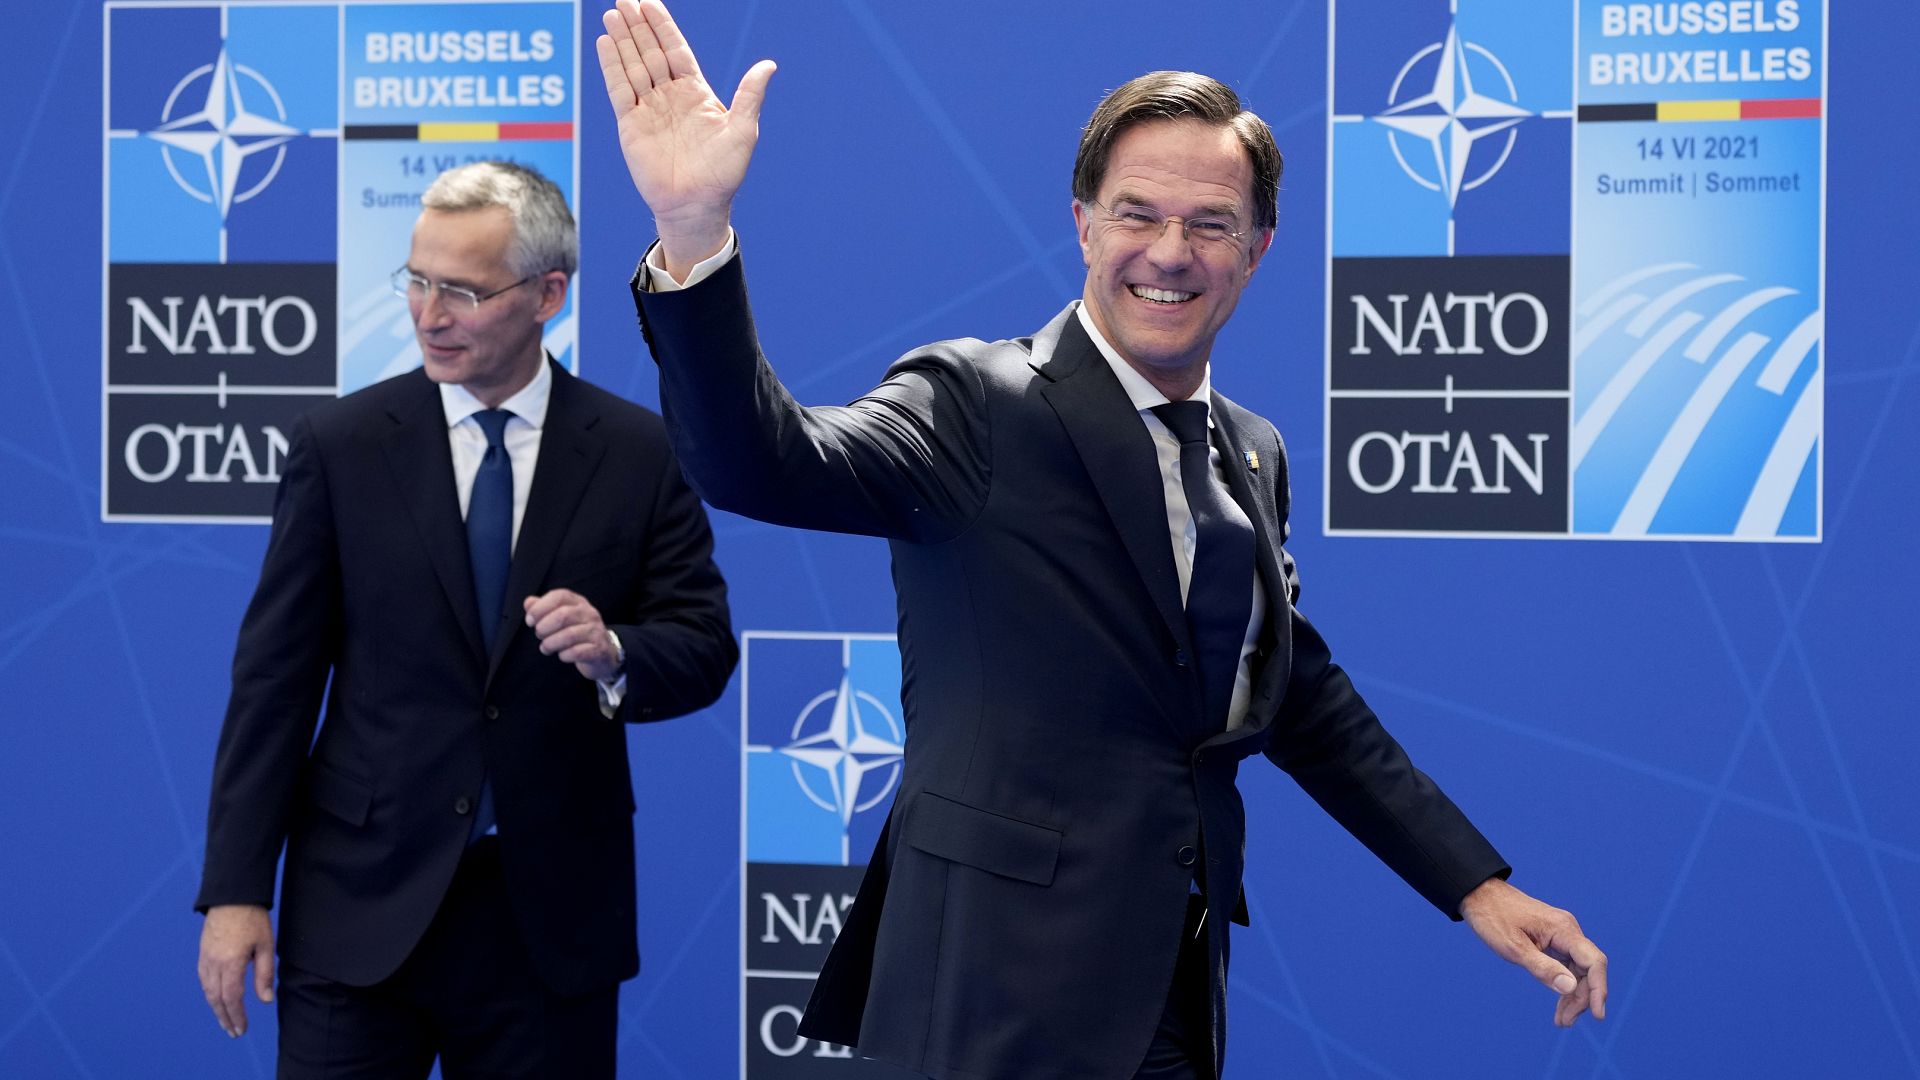 Mark Rutte váltja Jens Stoltenberget a NATO élén | Euronews